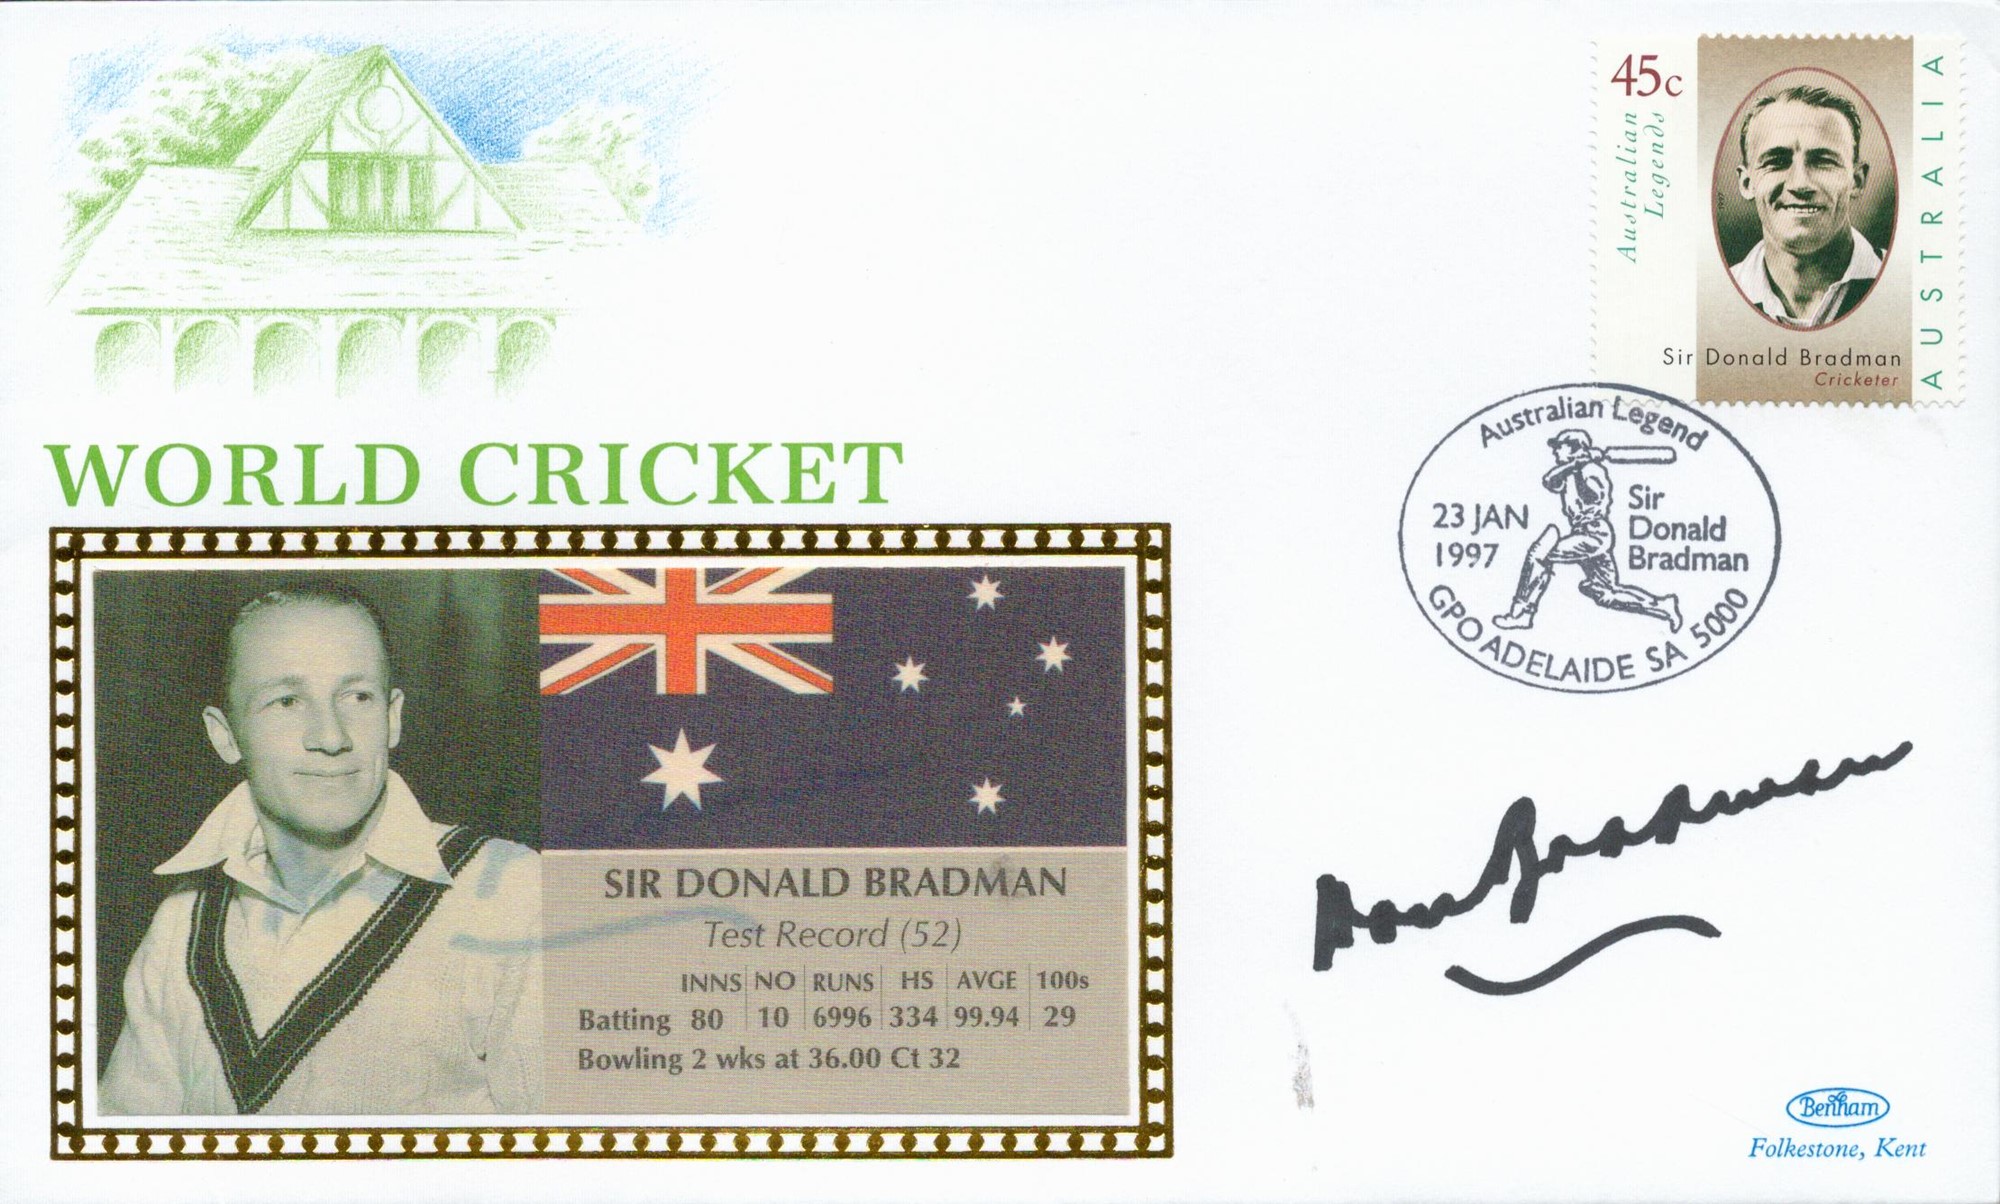 Cricket Don Bradman signed Benham 1997 World cricket legends Australian FDC dedicated to the great